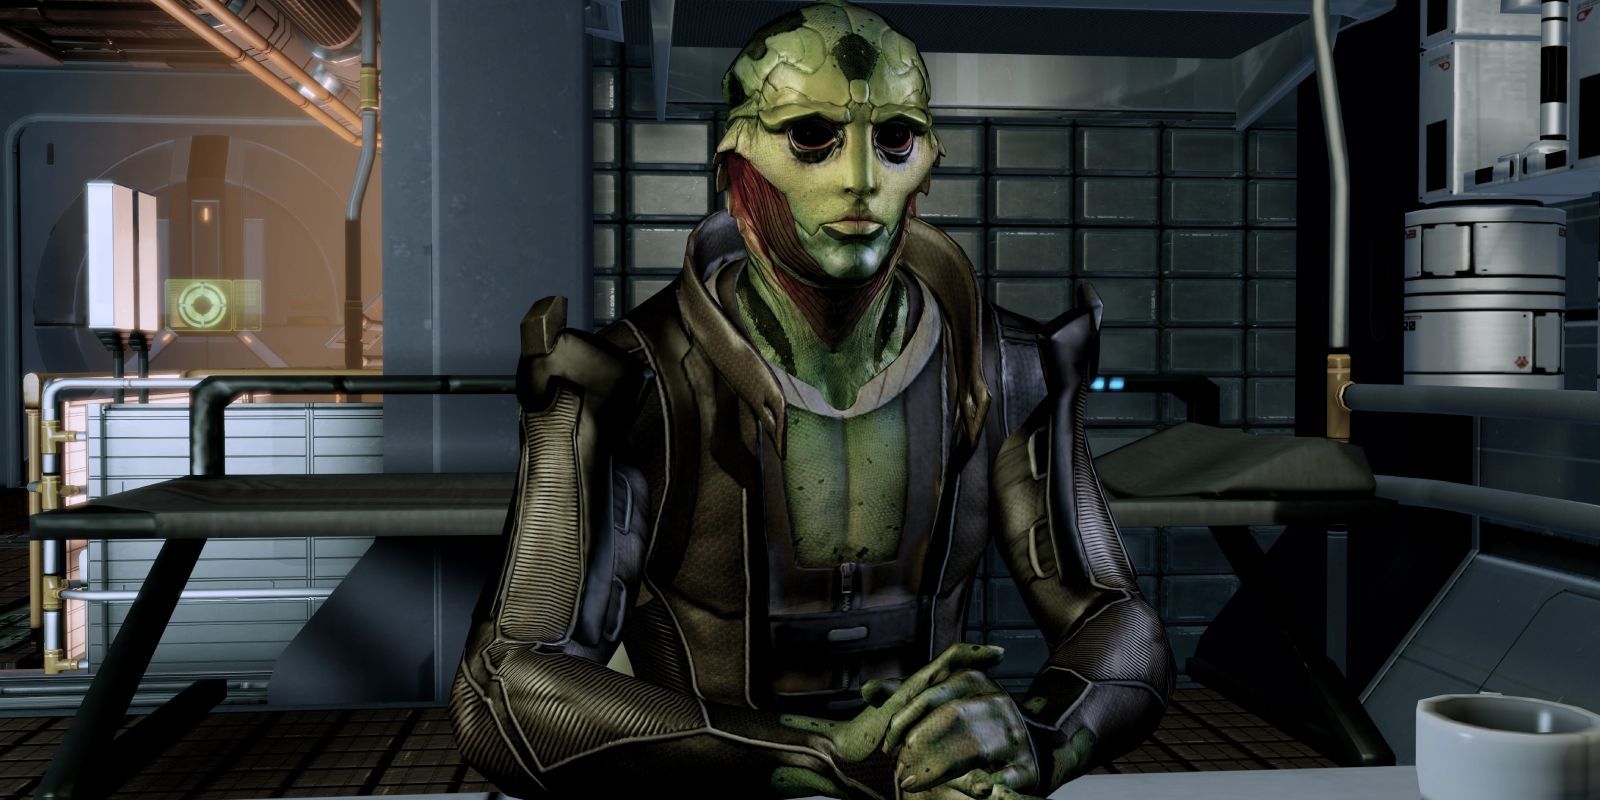 Mass Effect 2 Cast Who Plays Who On Shepard's Crew Aliens Thane Samara Legion Grunt Mordin